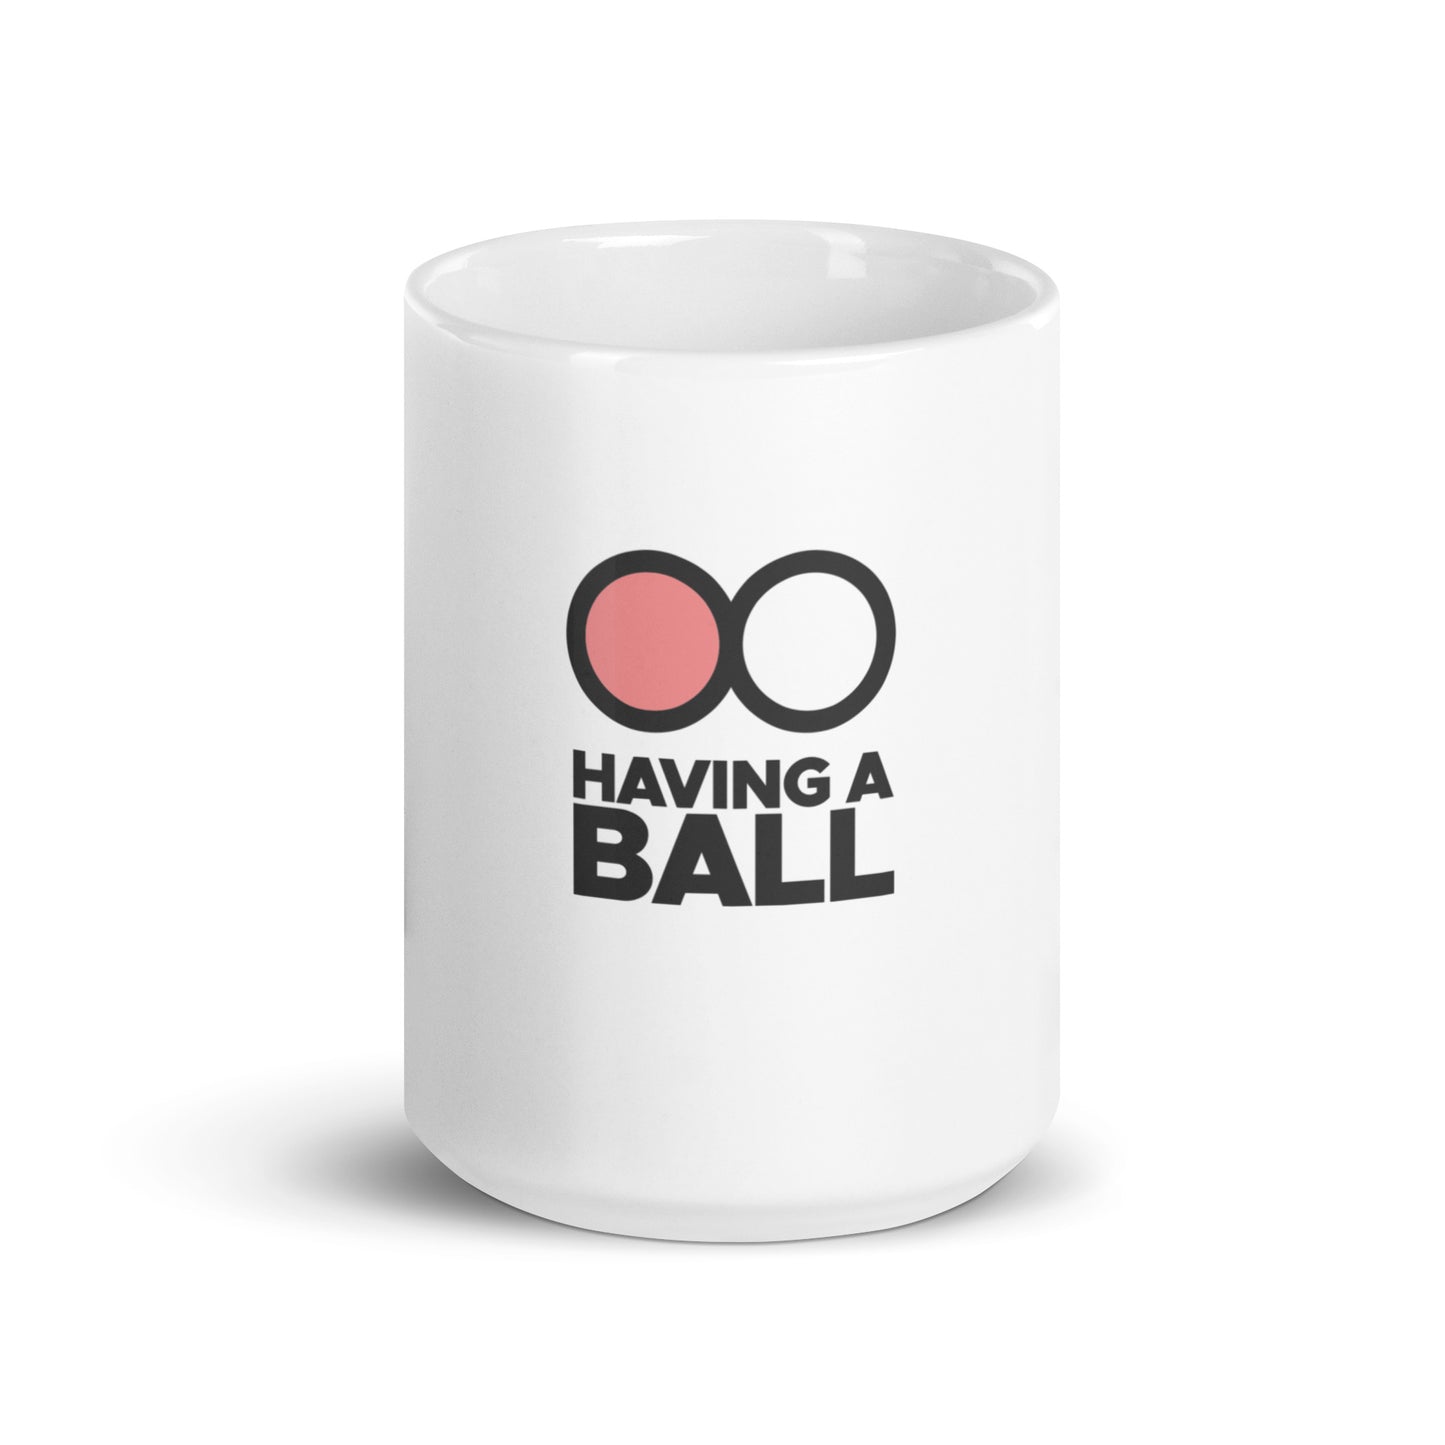 Having A Ball - White Glossy Mug